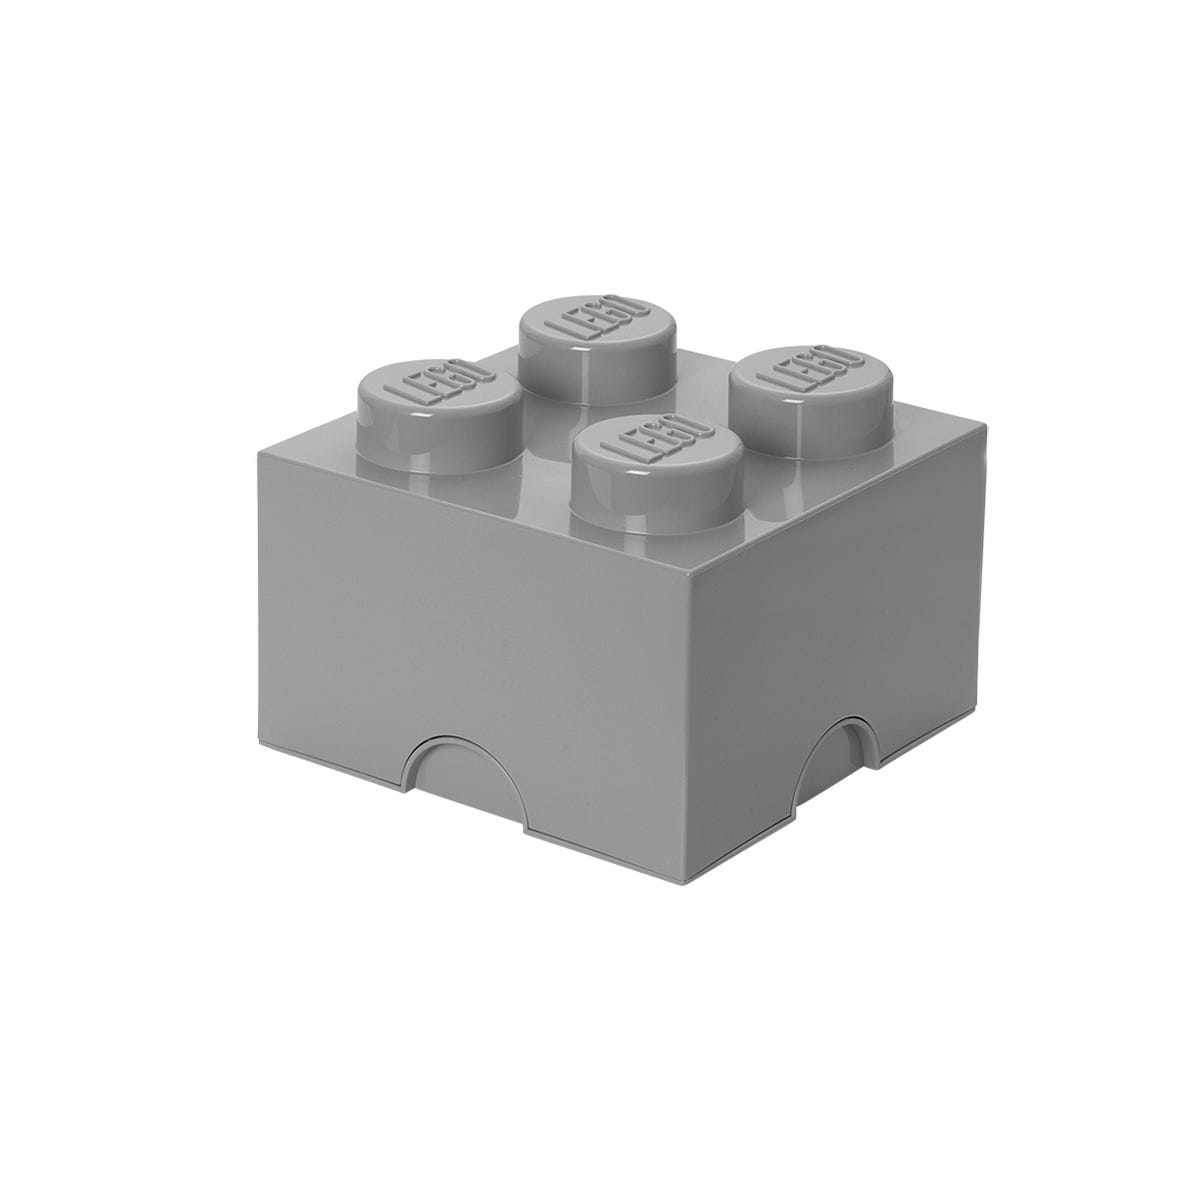 4-Stud Storage Brick - Medium Stone Gray